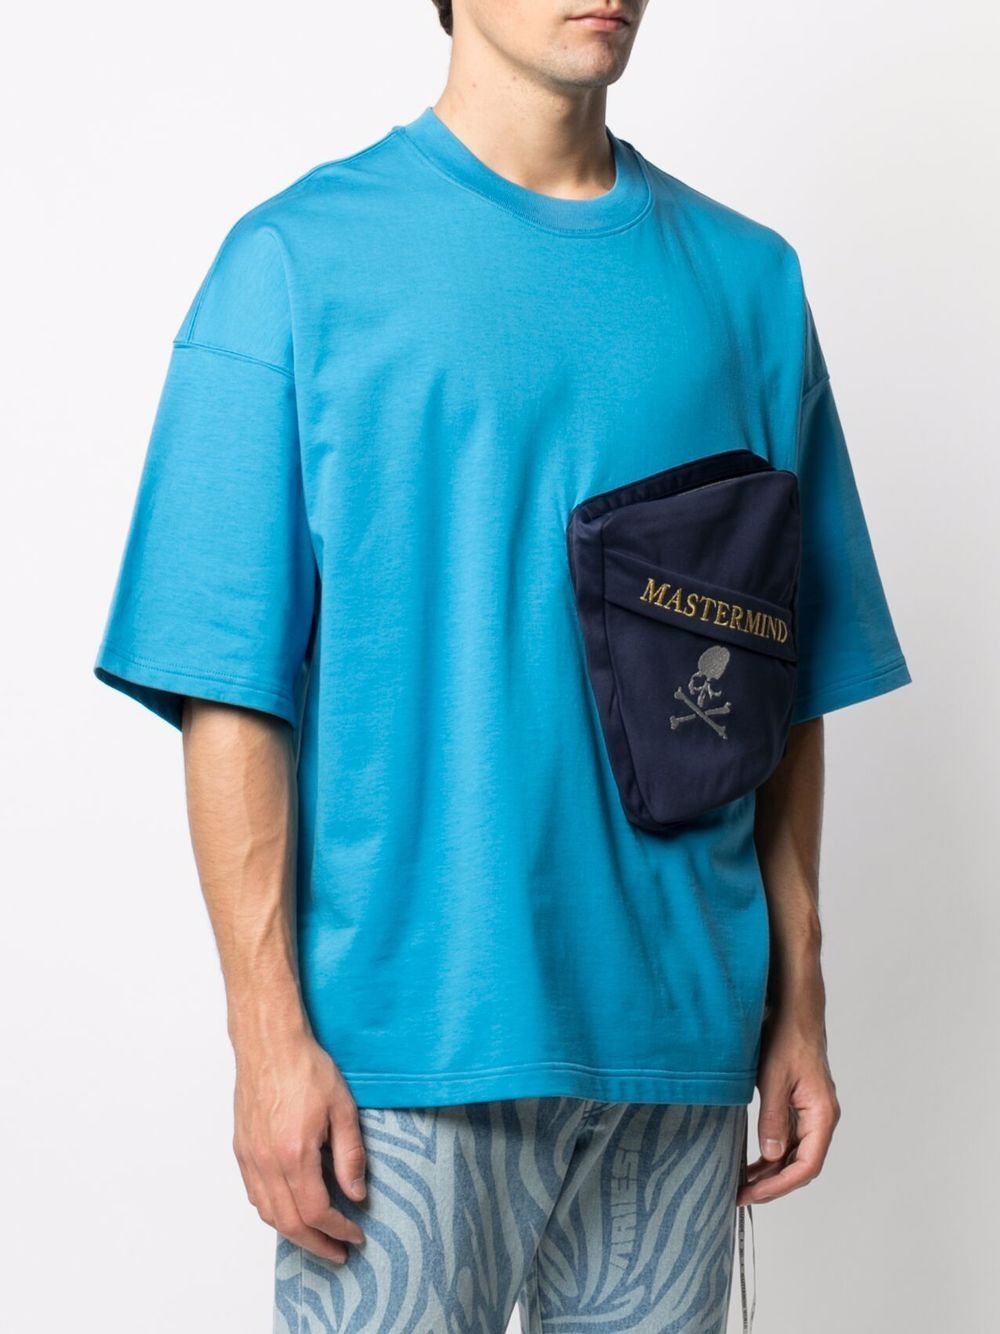 фото Mastermind world футболка с карманом на молнии